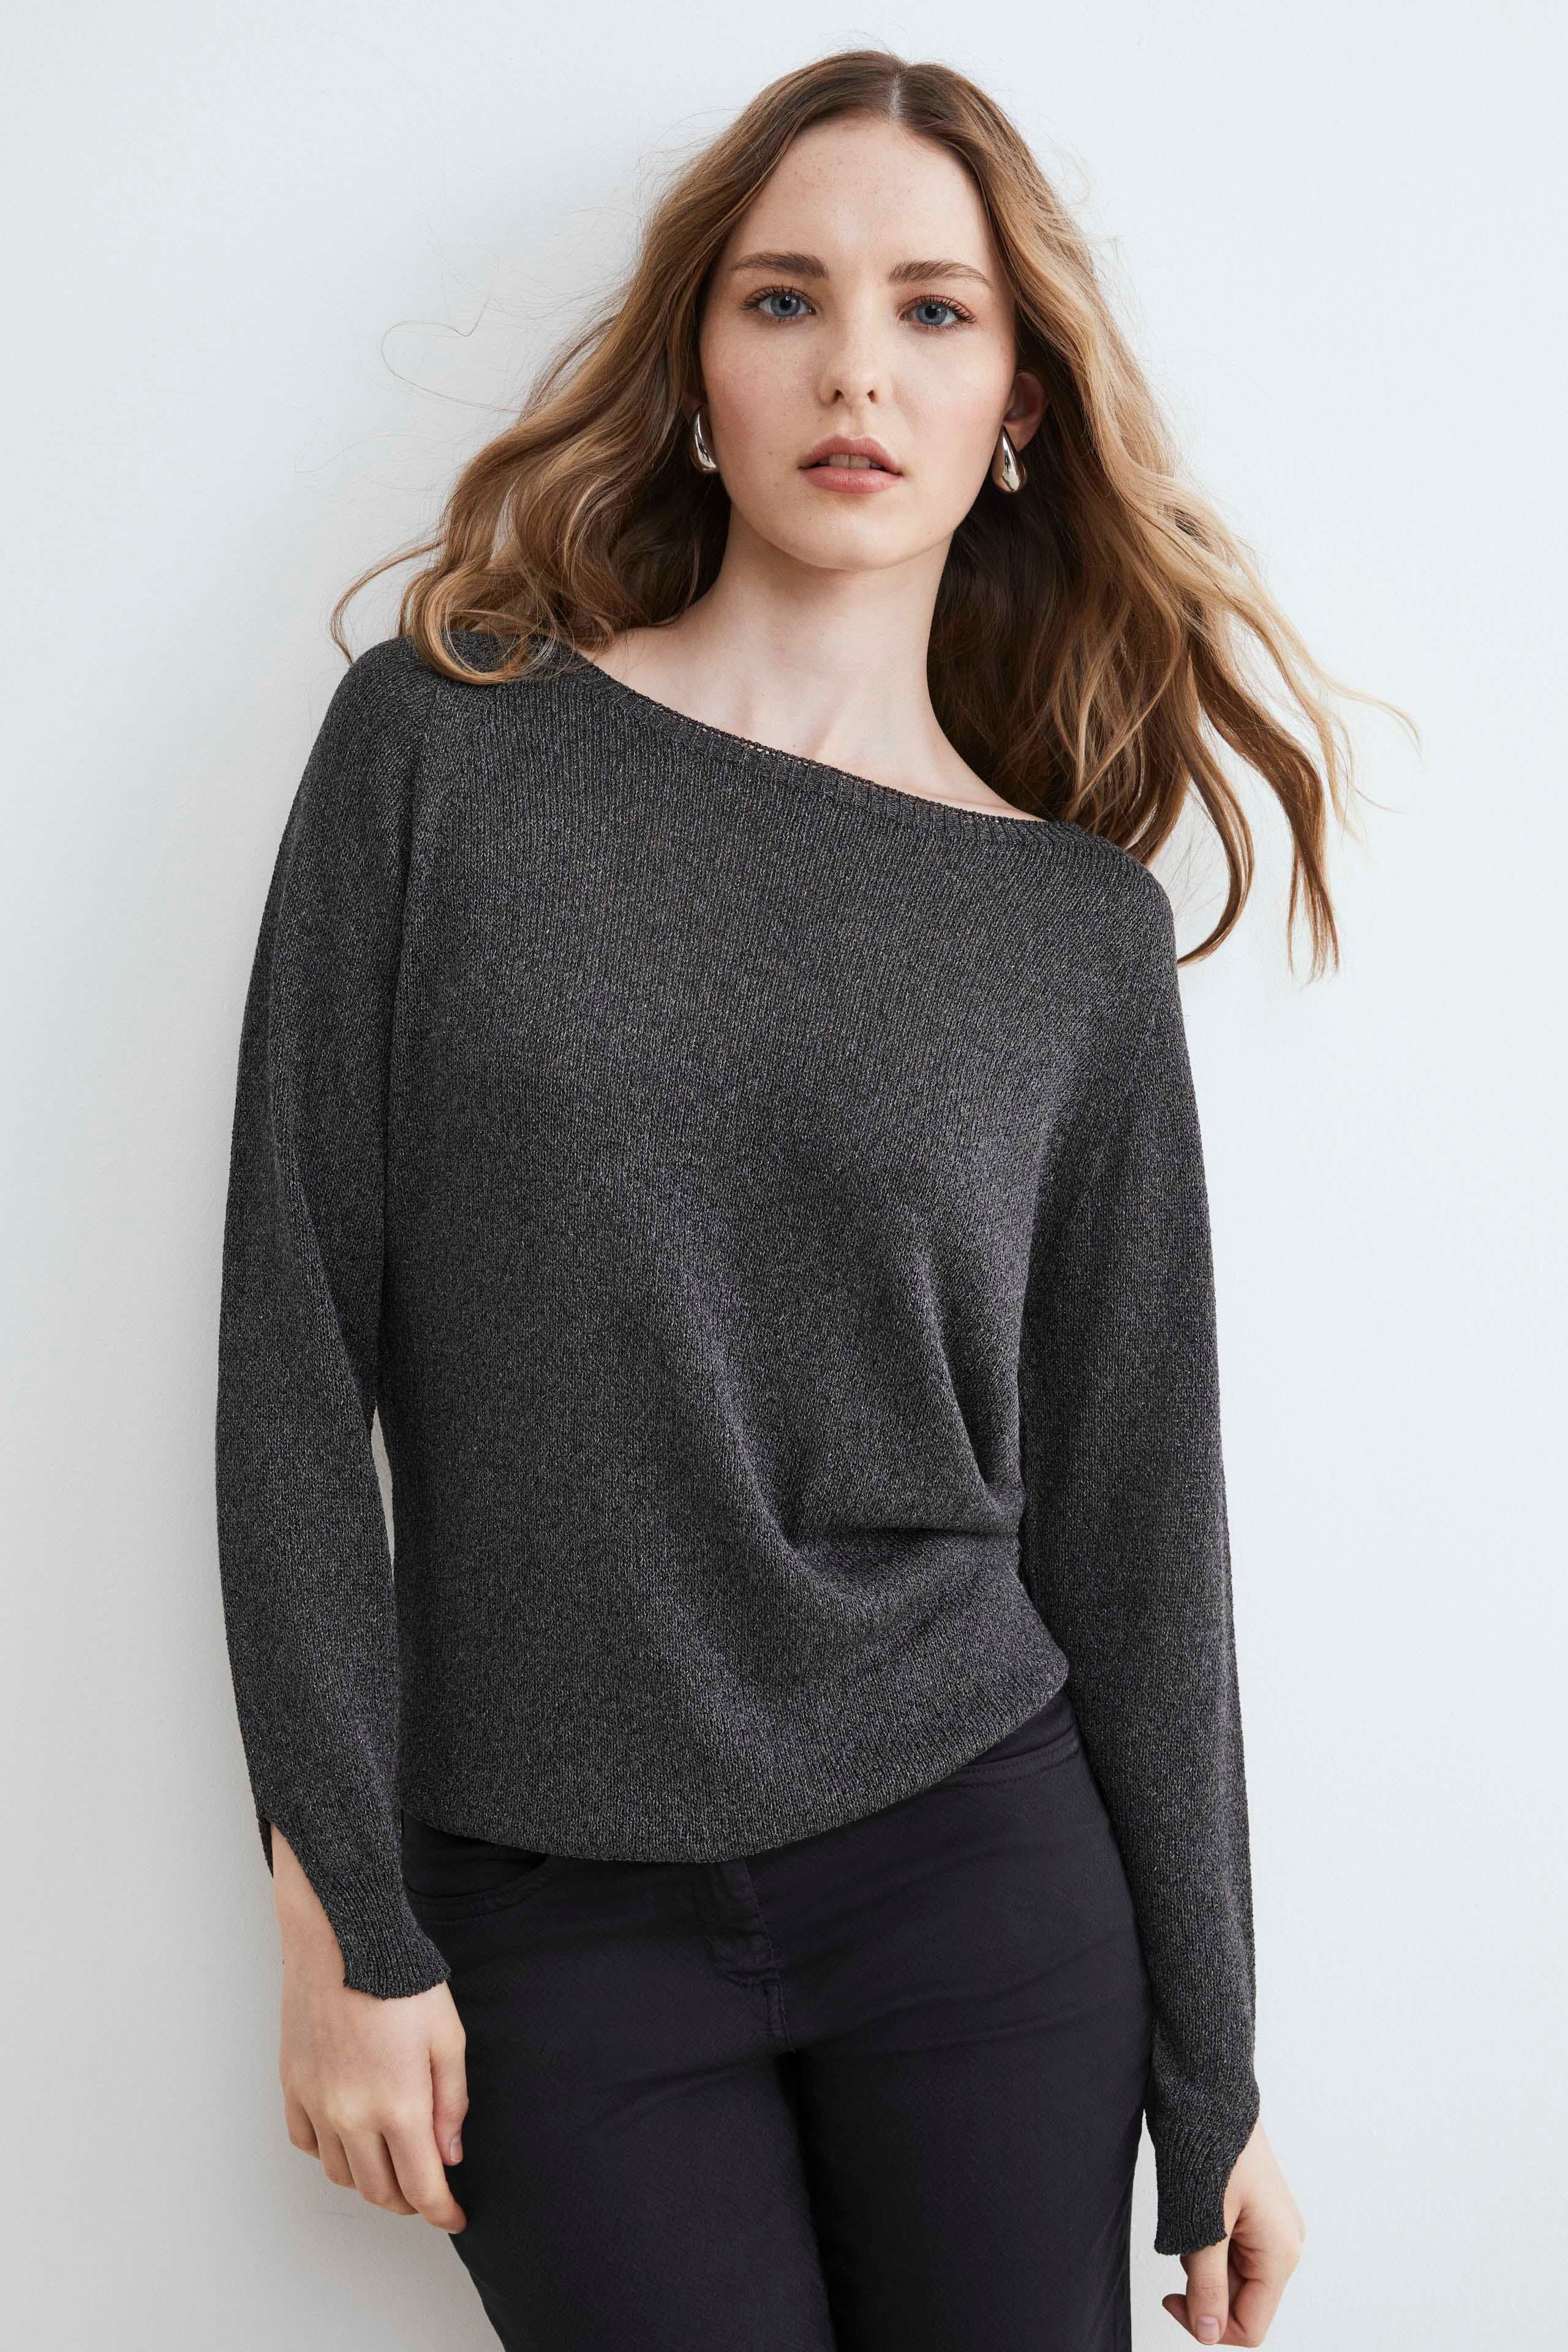 Boat-neck sweater - Lead grey